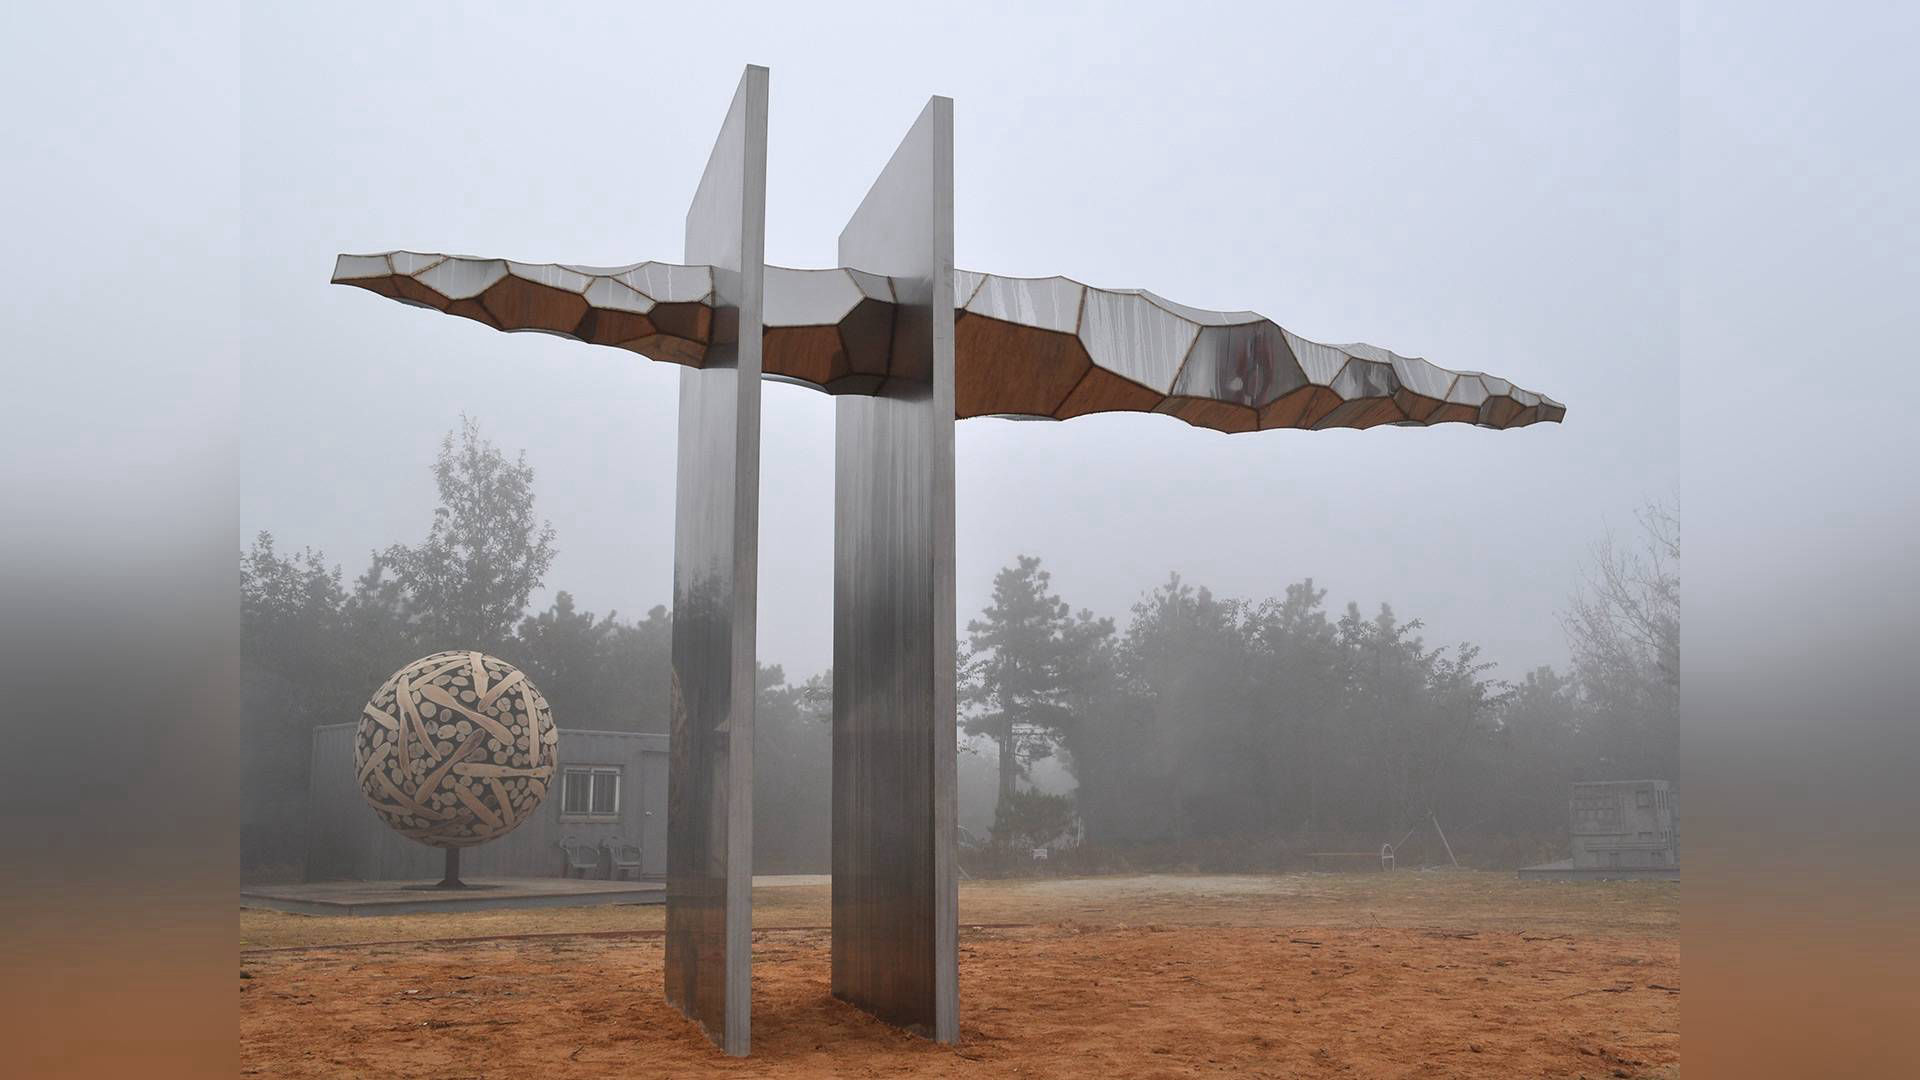 Transition - stainless steel sculpture by Heath Satow in Icheon South Korea CA